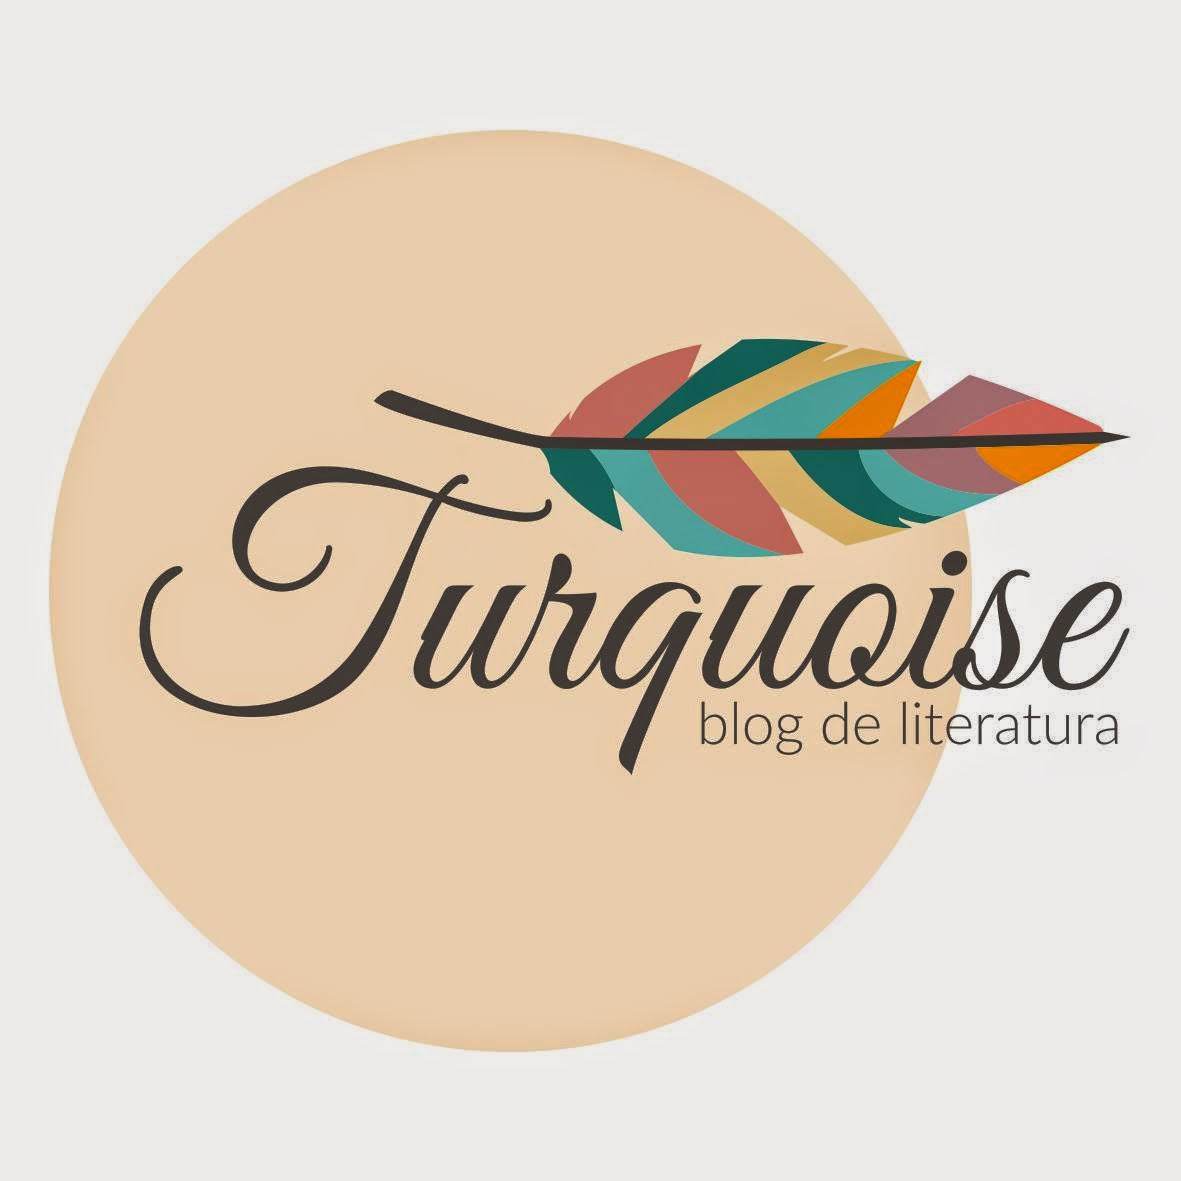 Ahijada "Anna Porcel y su blog "Turquoise"